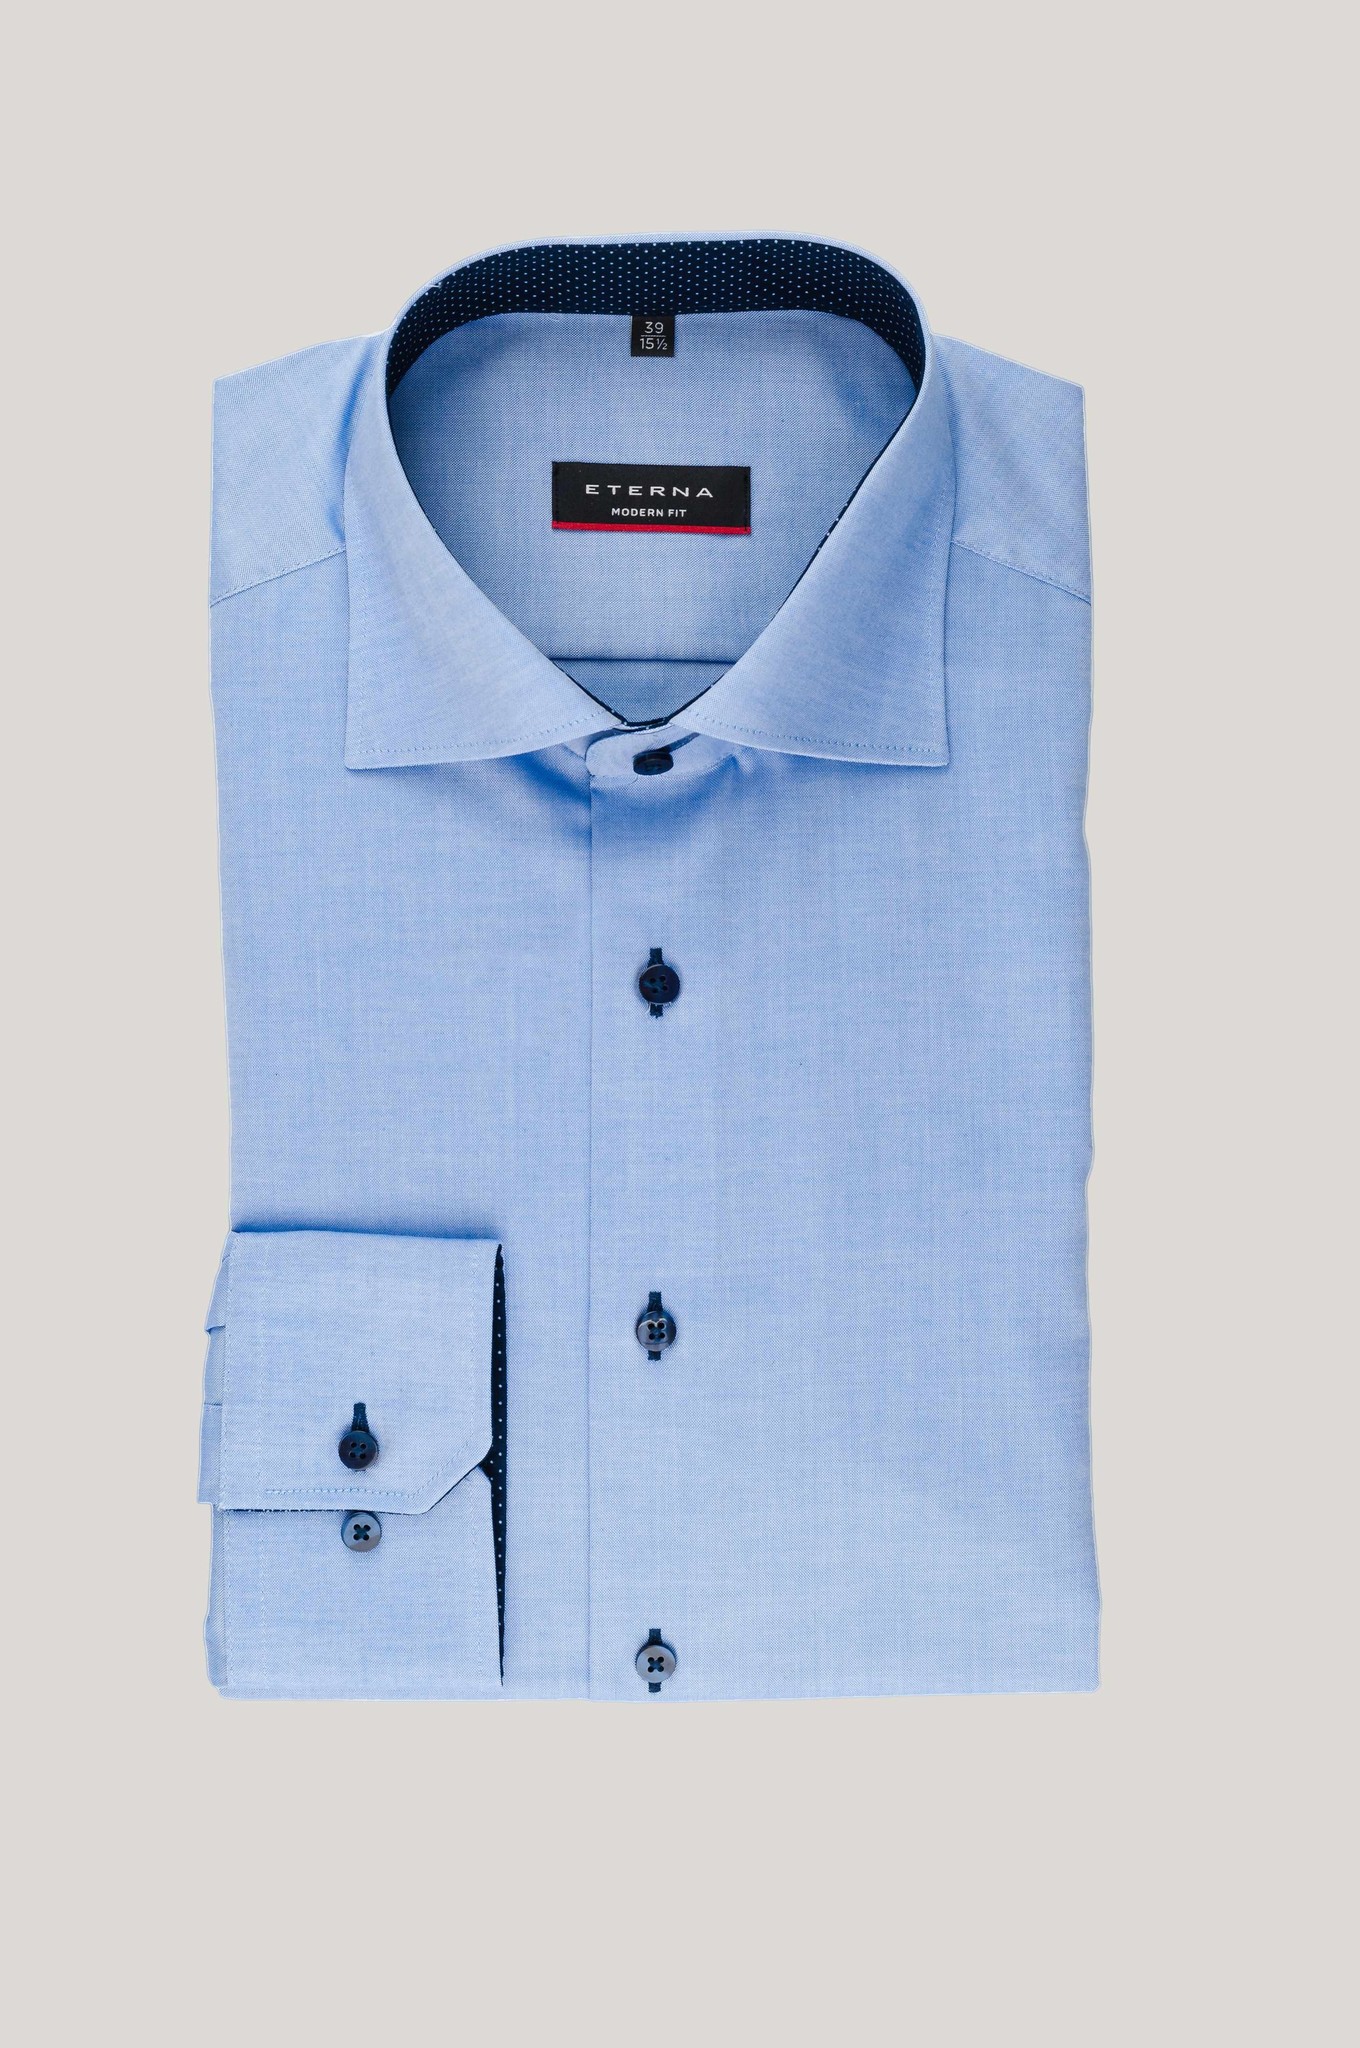 Eterna Fine Oxford Shirt - R. Scott & Co.